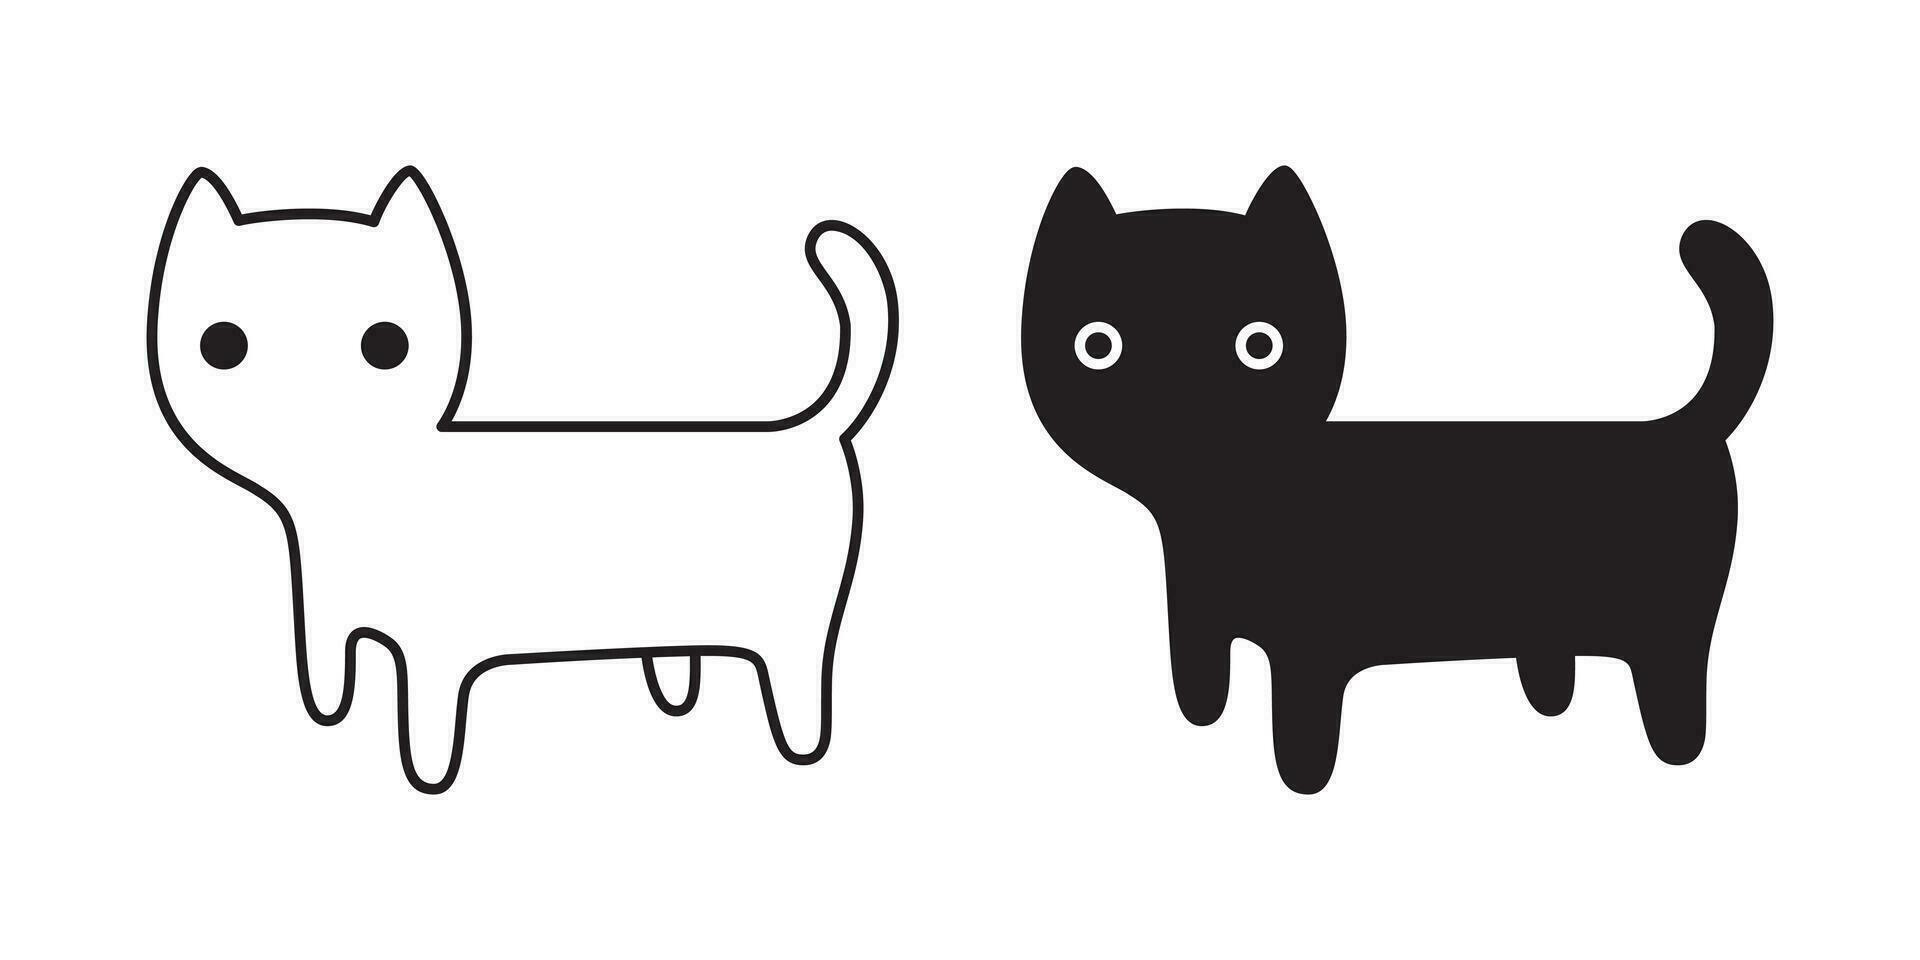 cat vector icon kitten calico logo symbol cartoon character illustration doodle design